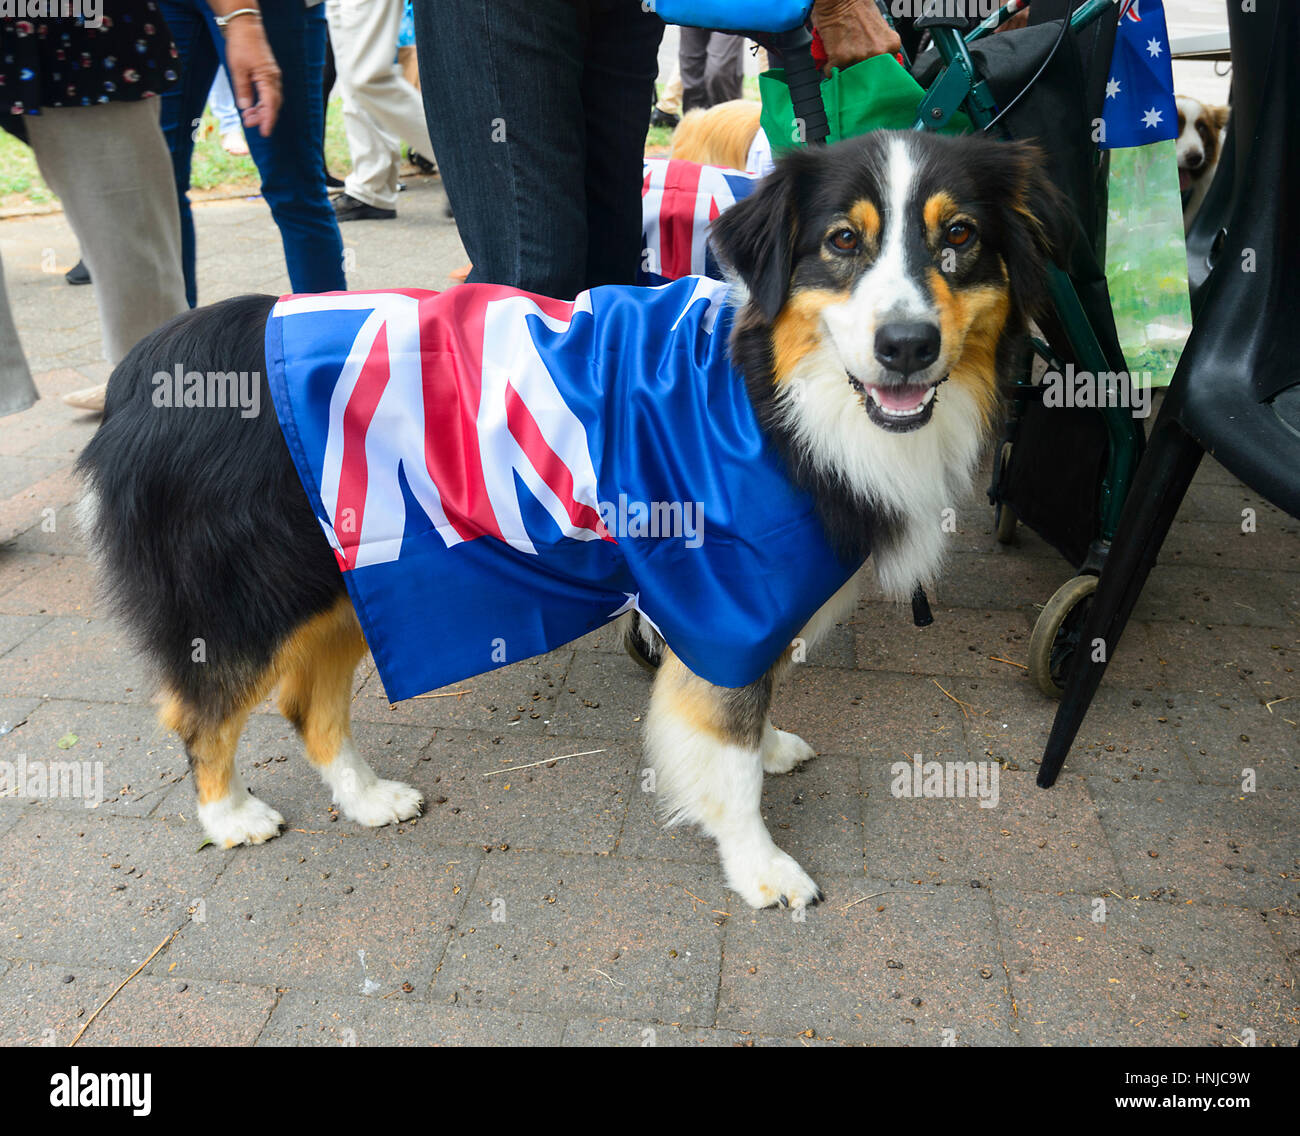 Australian Shepherd dog participating in the 2017 Australia Day parade, wearing an Australian flag coat, Berrima, New South Wales, Australia Stock Photo